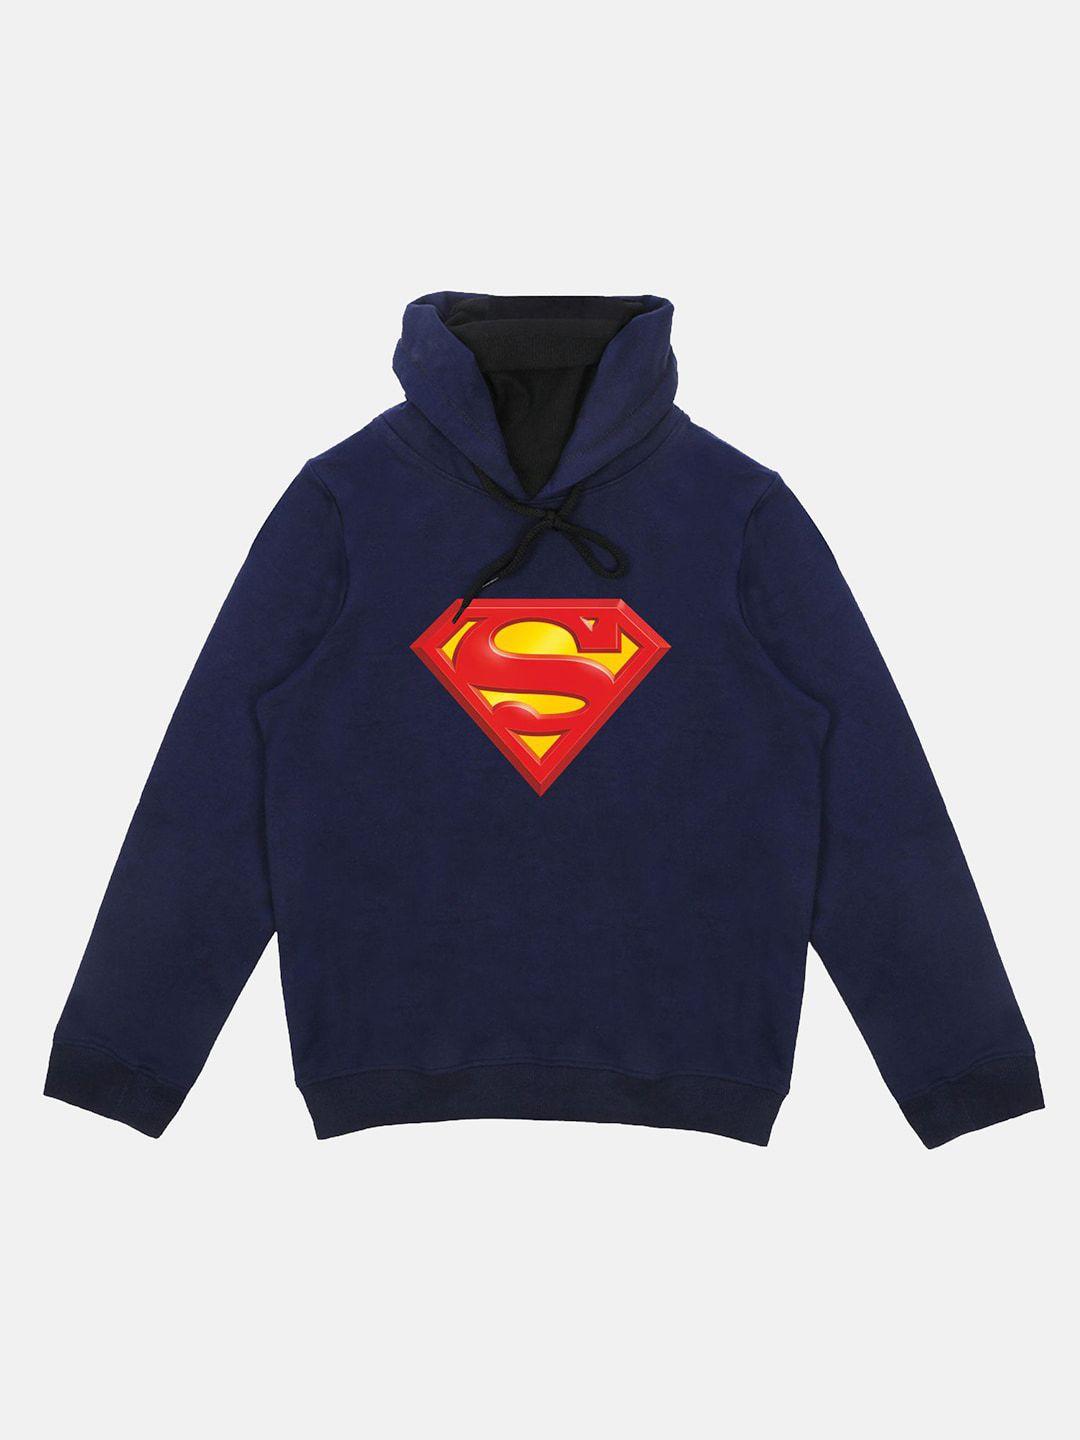 dc by wear your mind unisex kids navy blue superman printed hooded sweatshirt